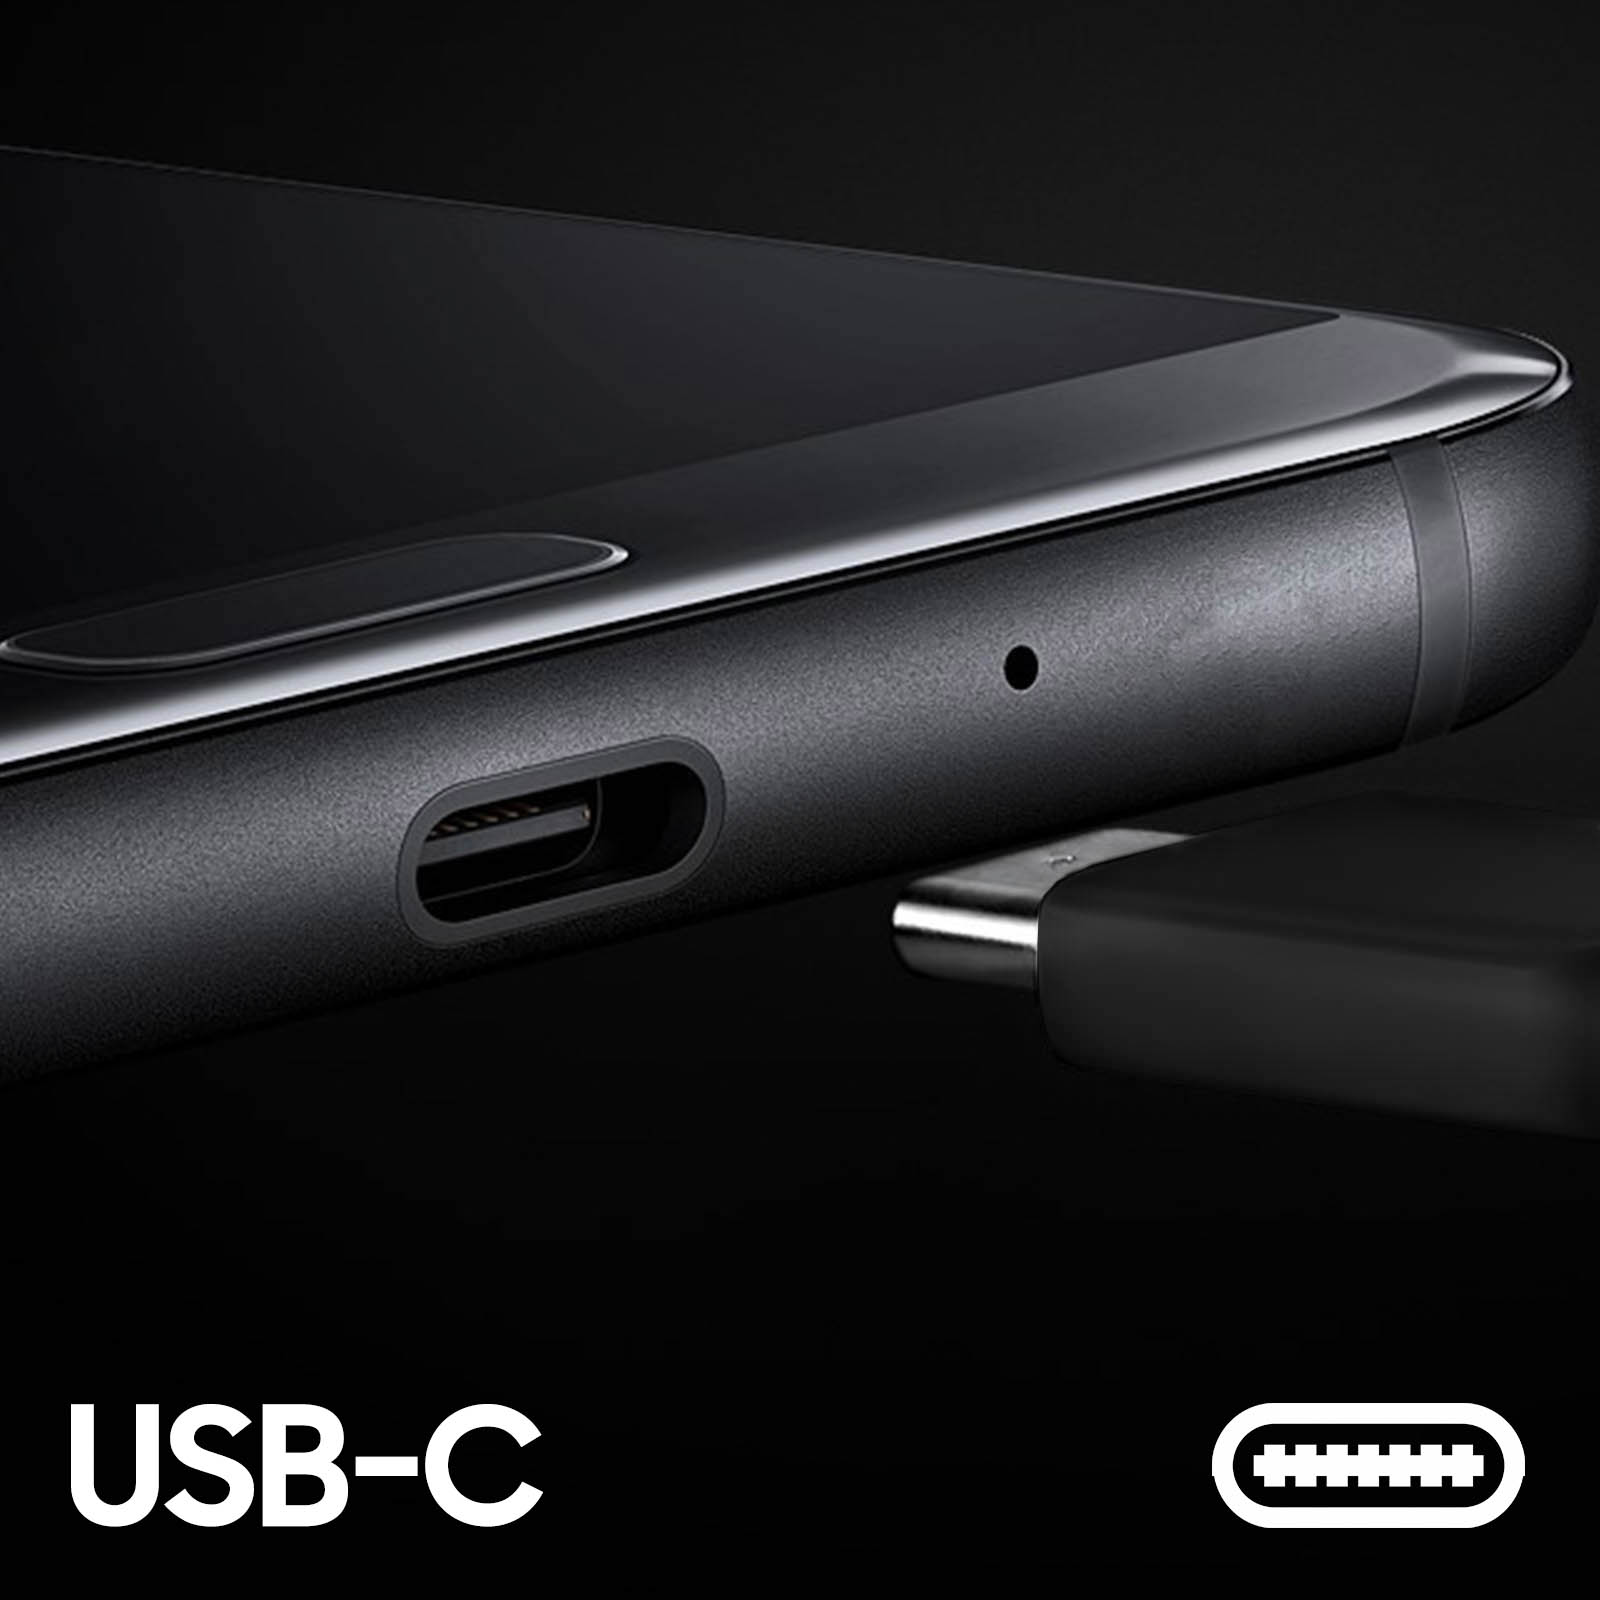 Écouteurs USB-C d'origine Samsung - Qualité Origine